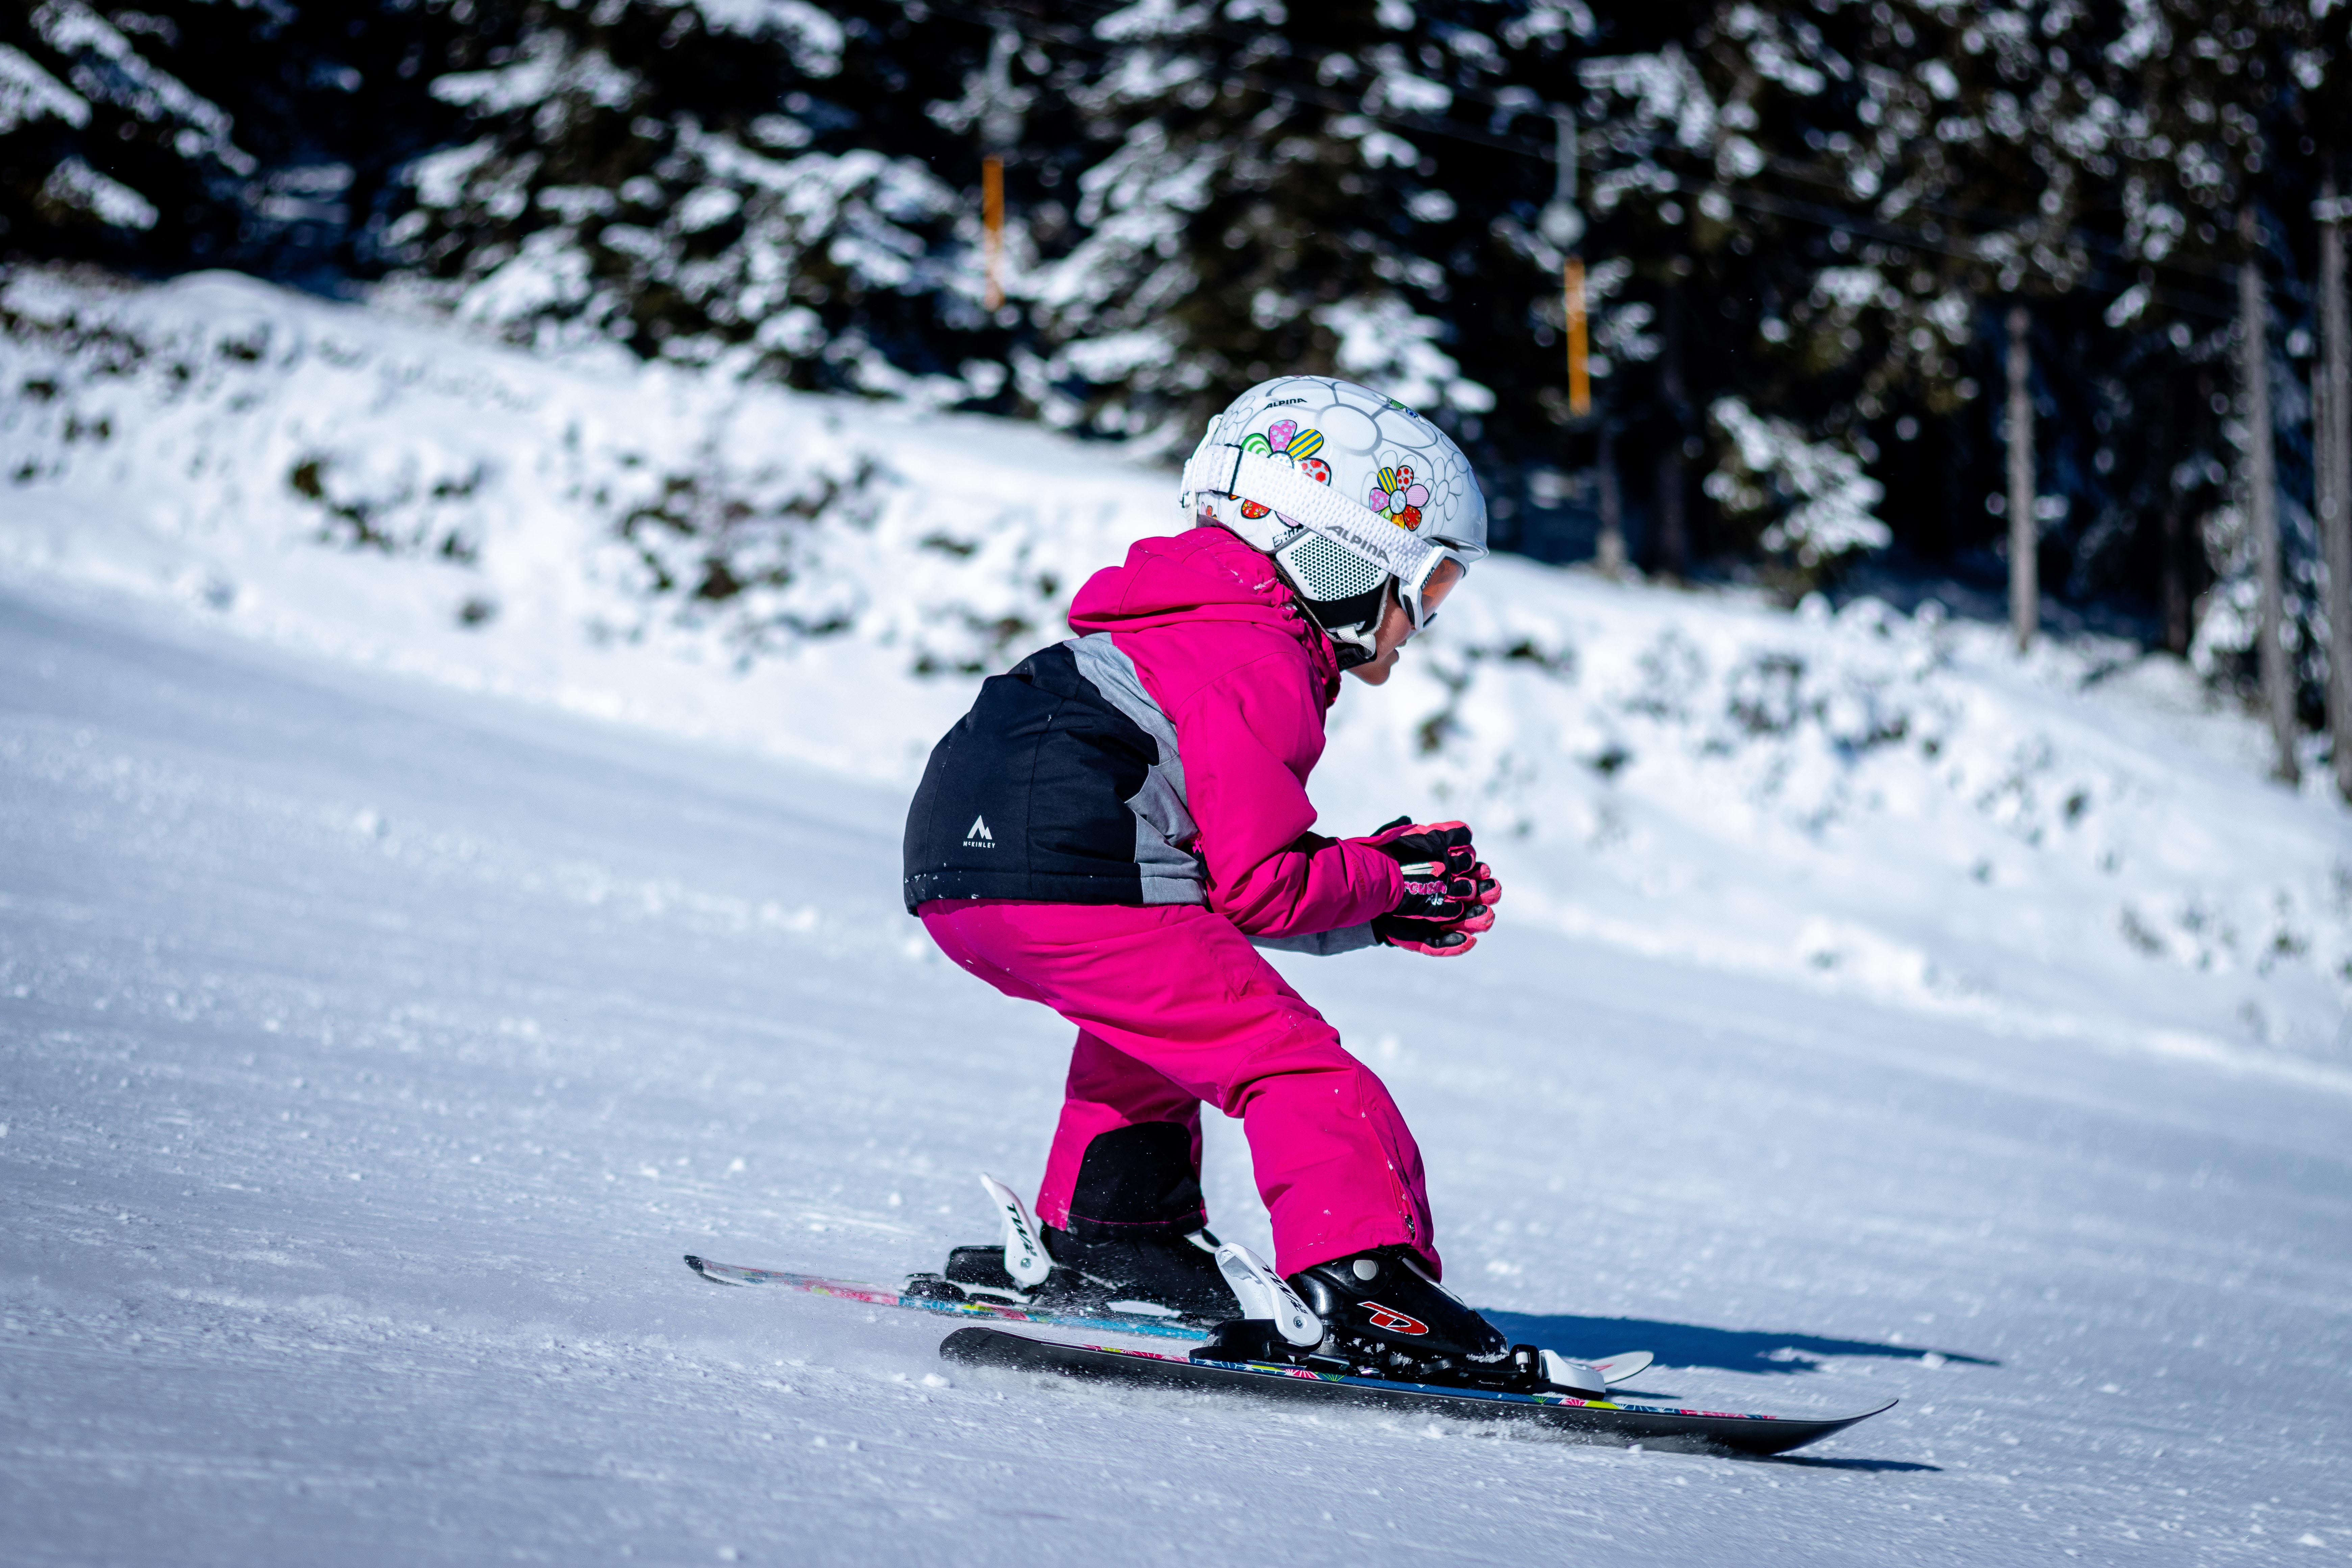 Familienpass JÃ¤n skiing-6035709_pixabay.jpg